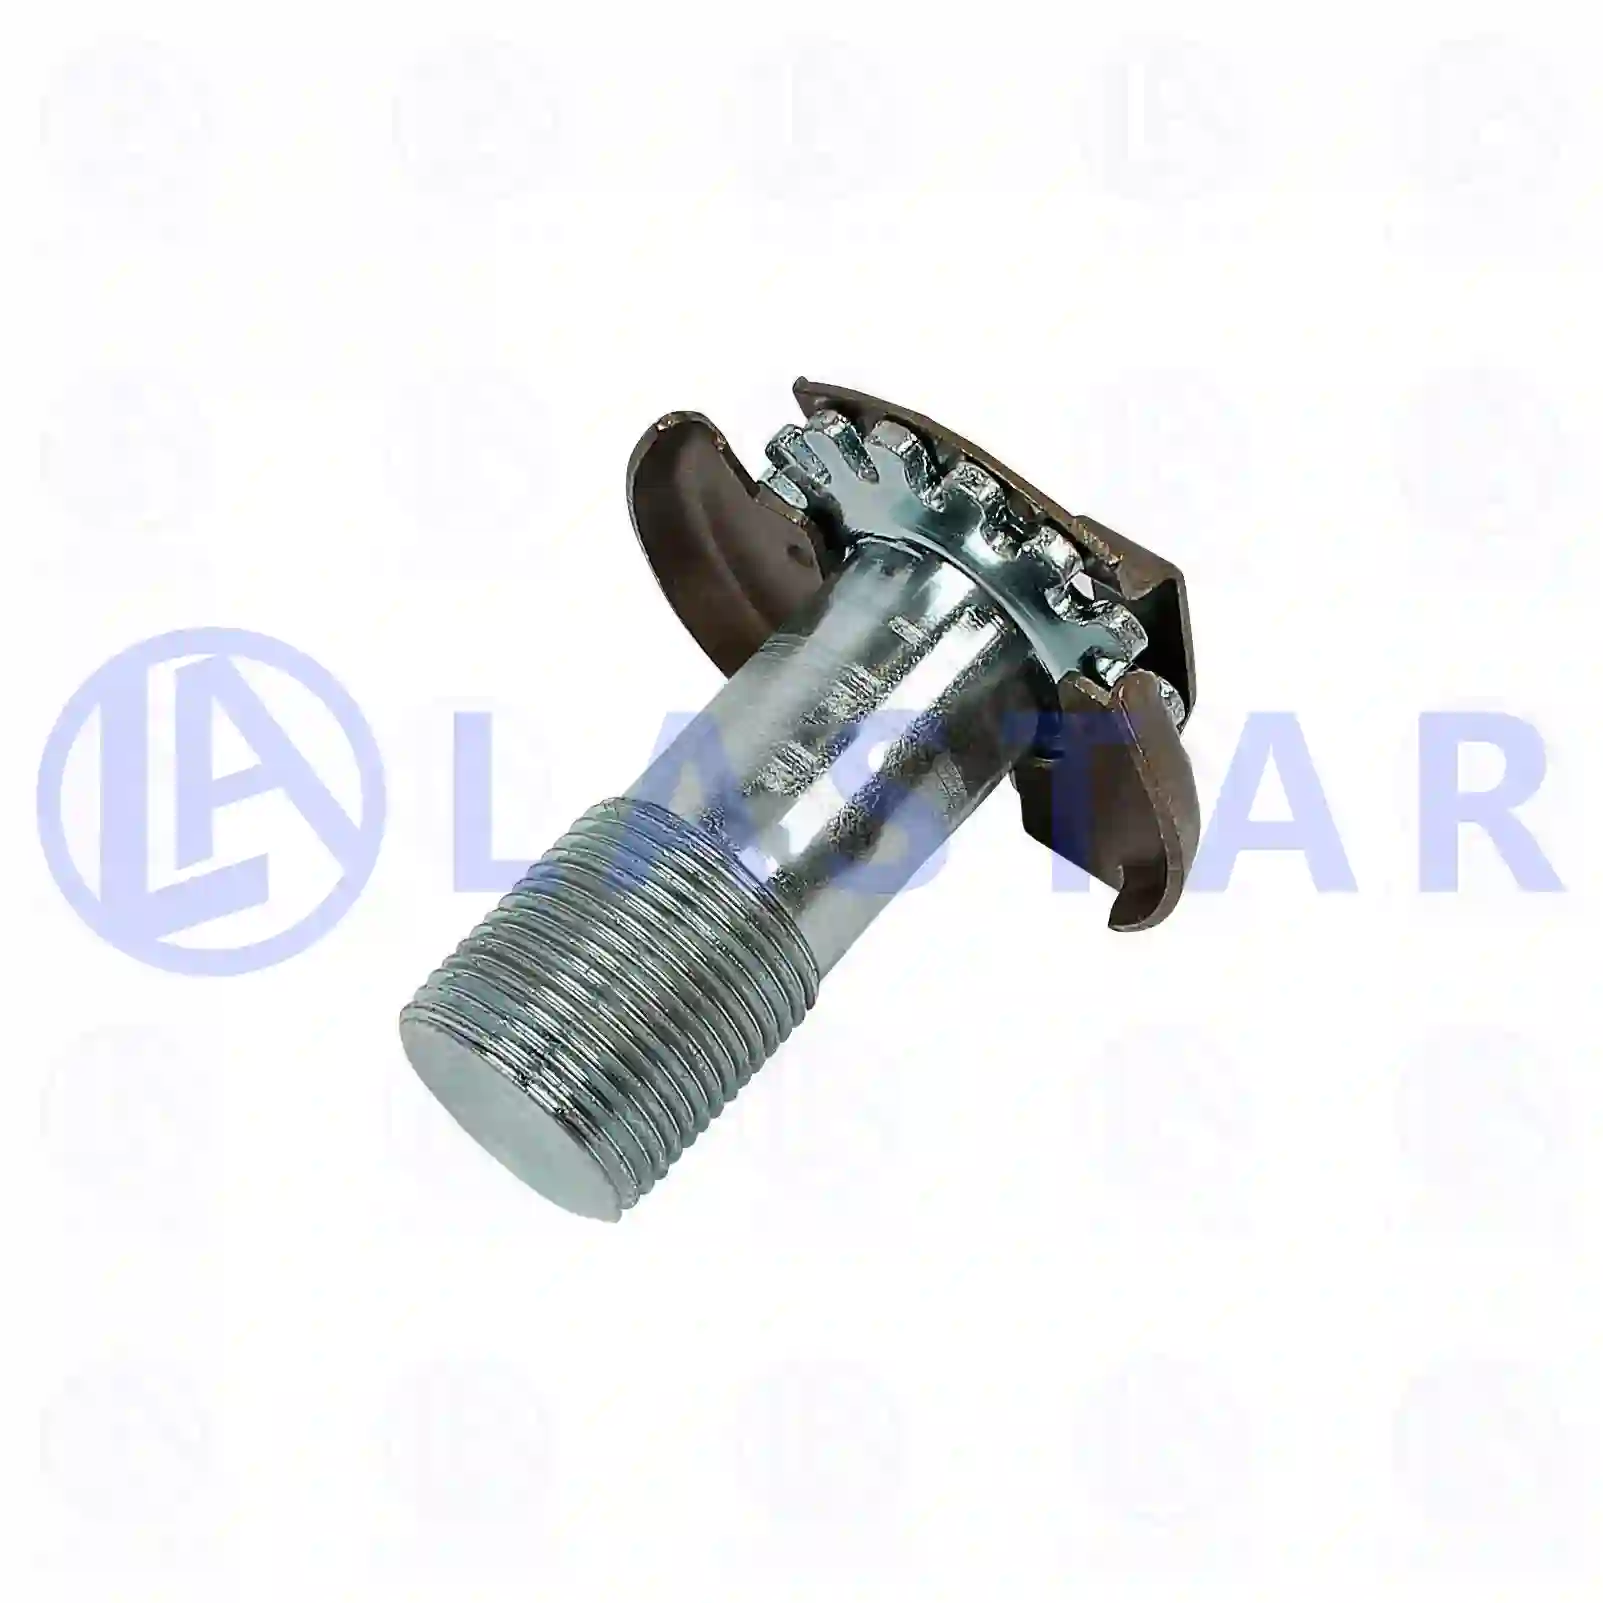  Adjusting bolt || Lastar Spare Part | Truck Spare Parts, Auotomotive Spare Parts